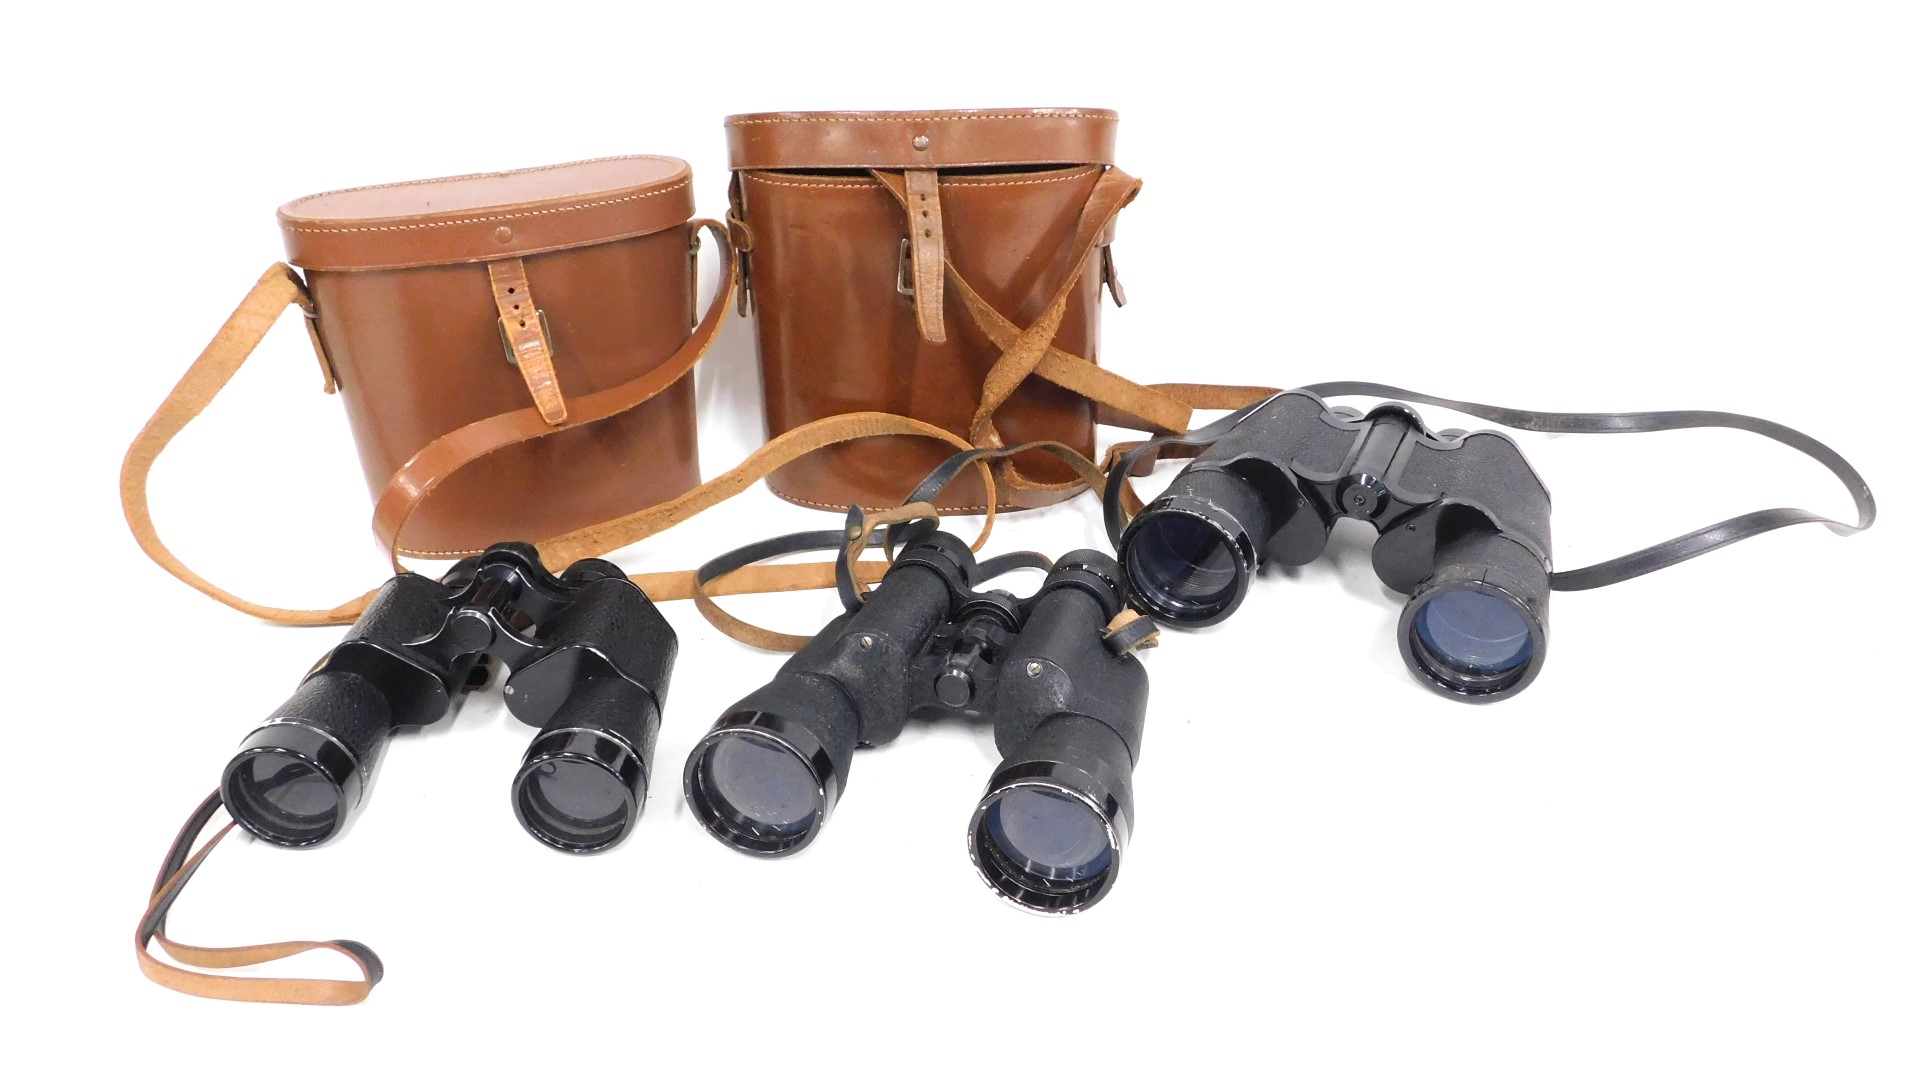 Three pairs of binoculars, comprising a set of 10x50 binoculars, Prinz 10x50 binoculars, and Ray of